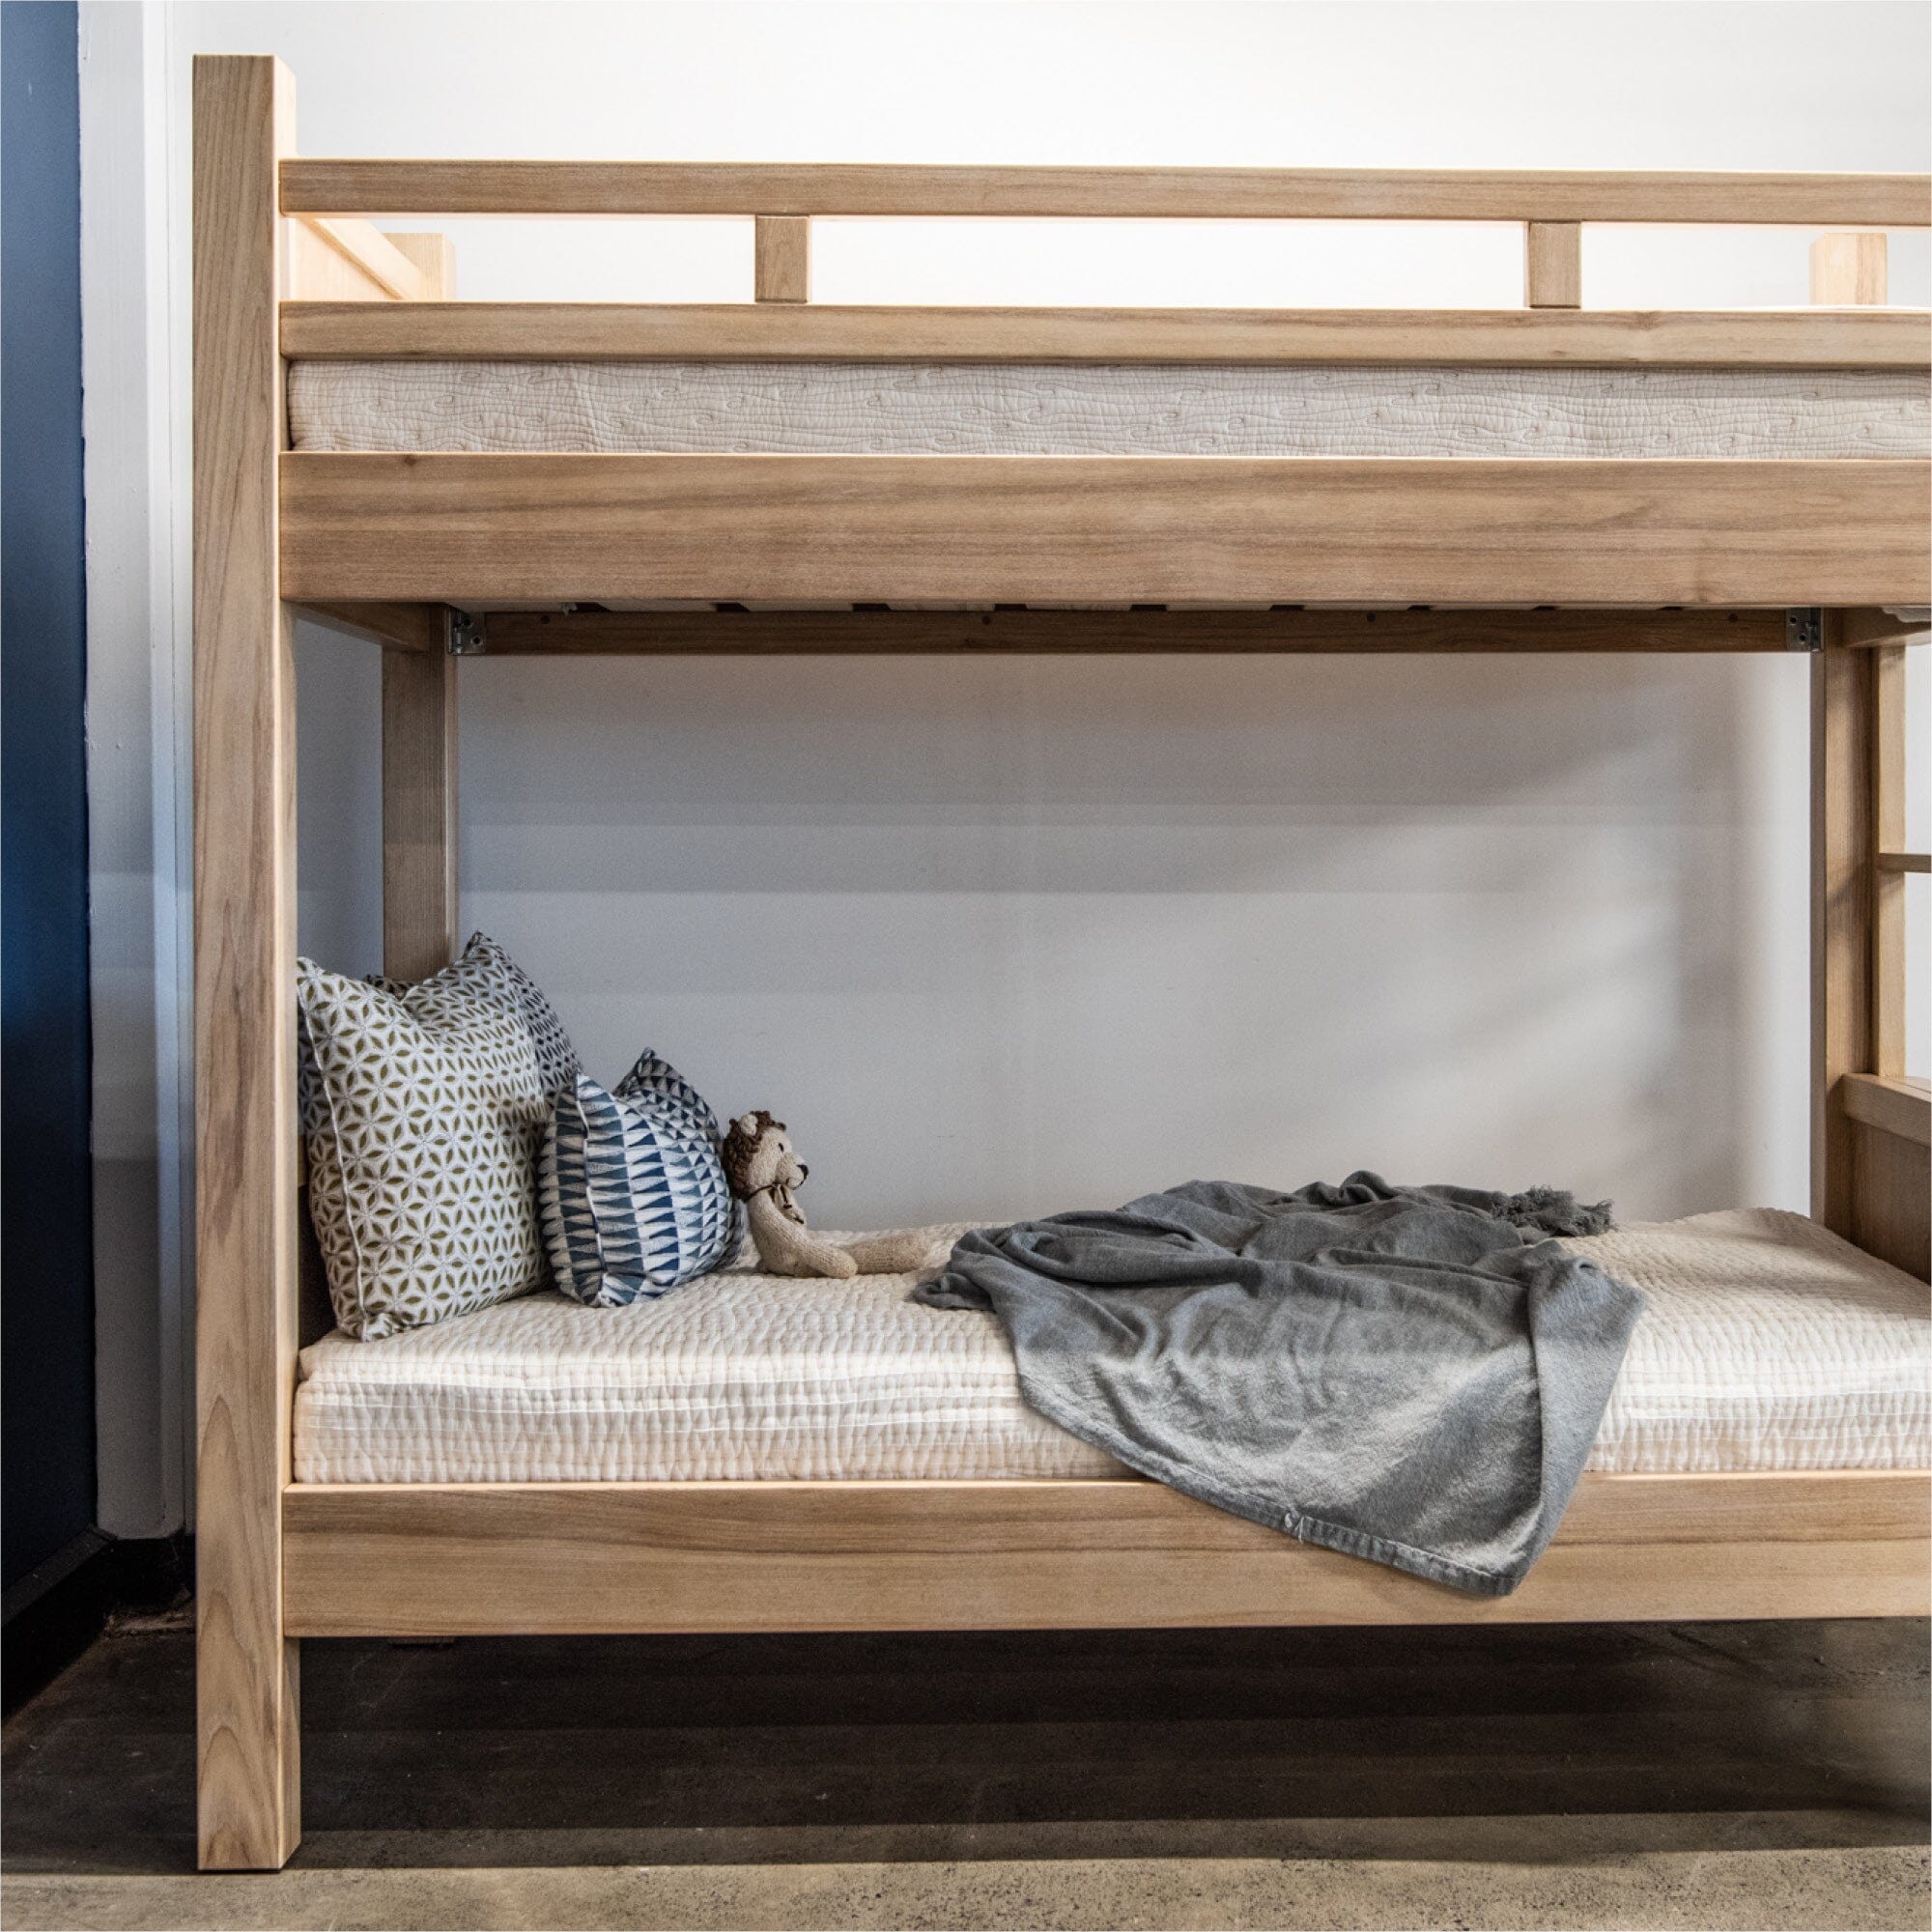 King Single Bunk Beds - Fixed Ladder Bedroom Furniture Beachwood Designs Limed Ash 